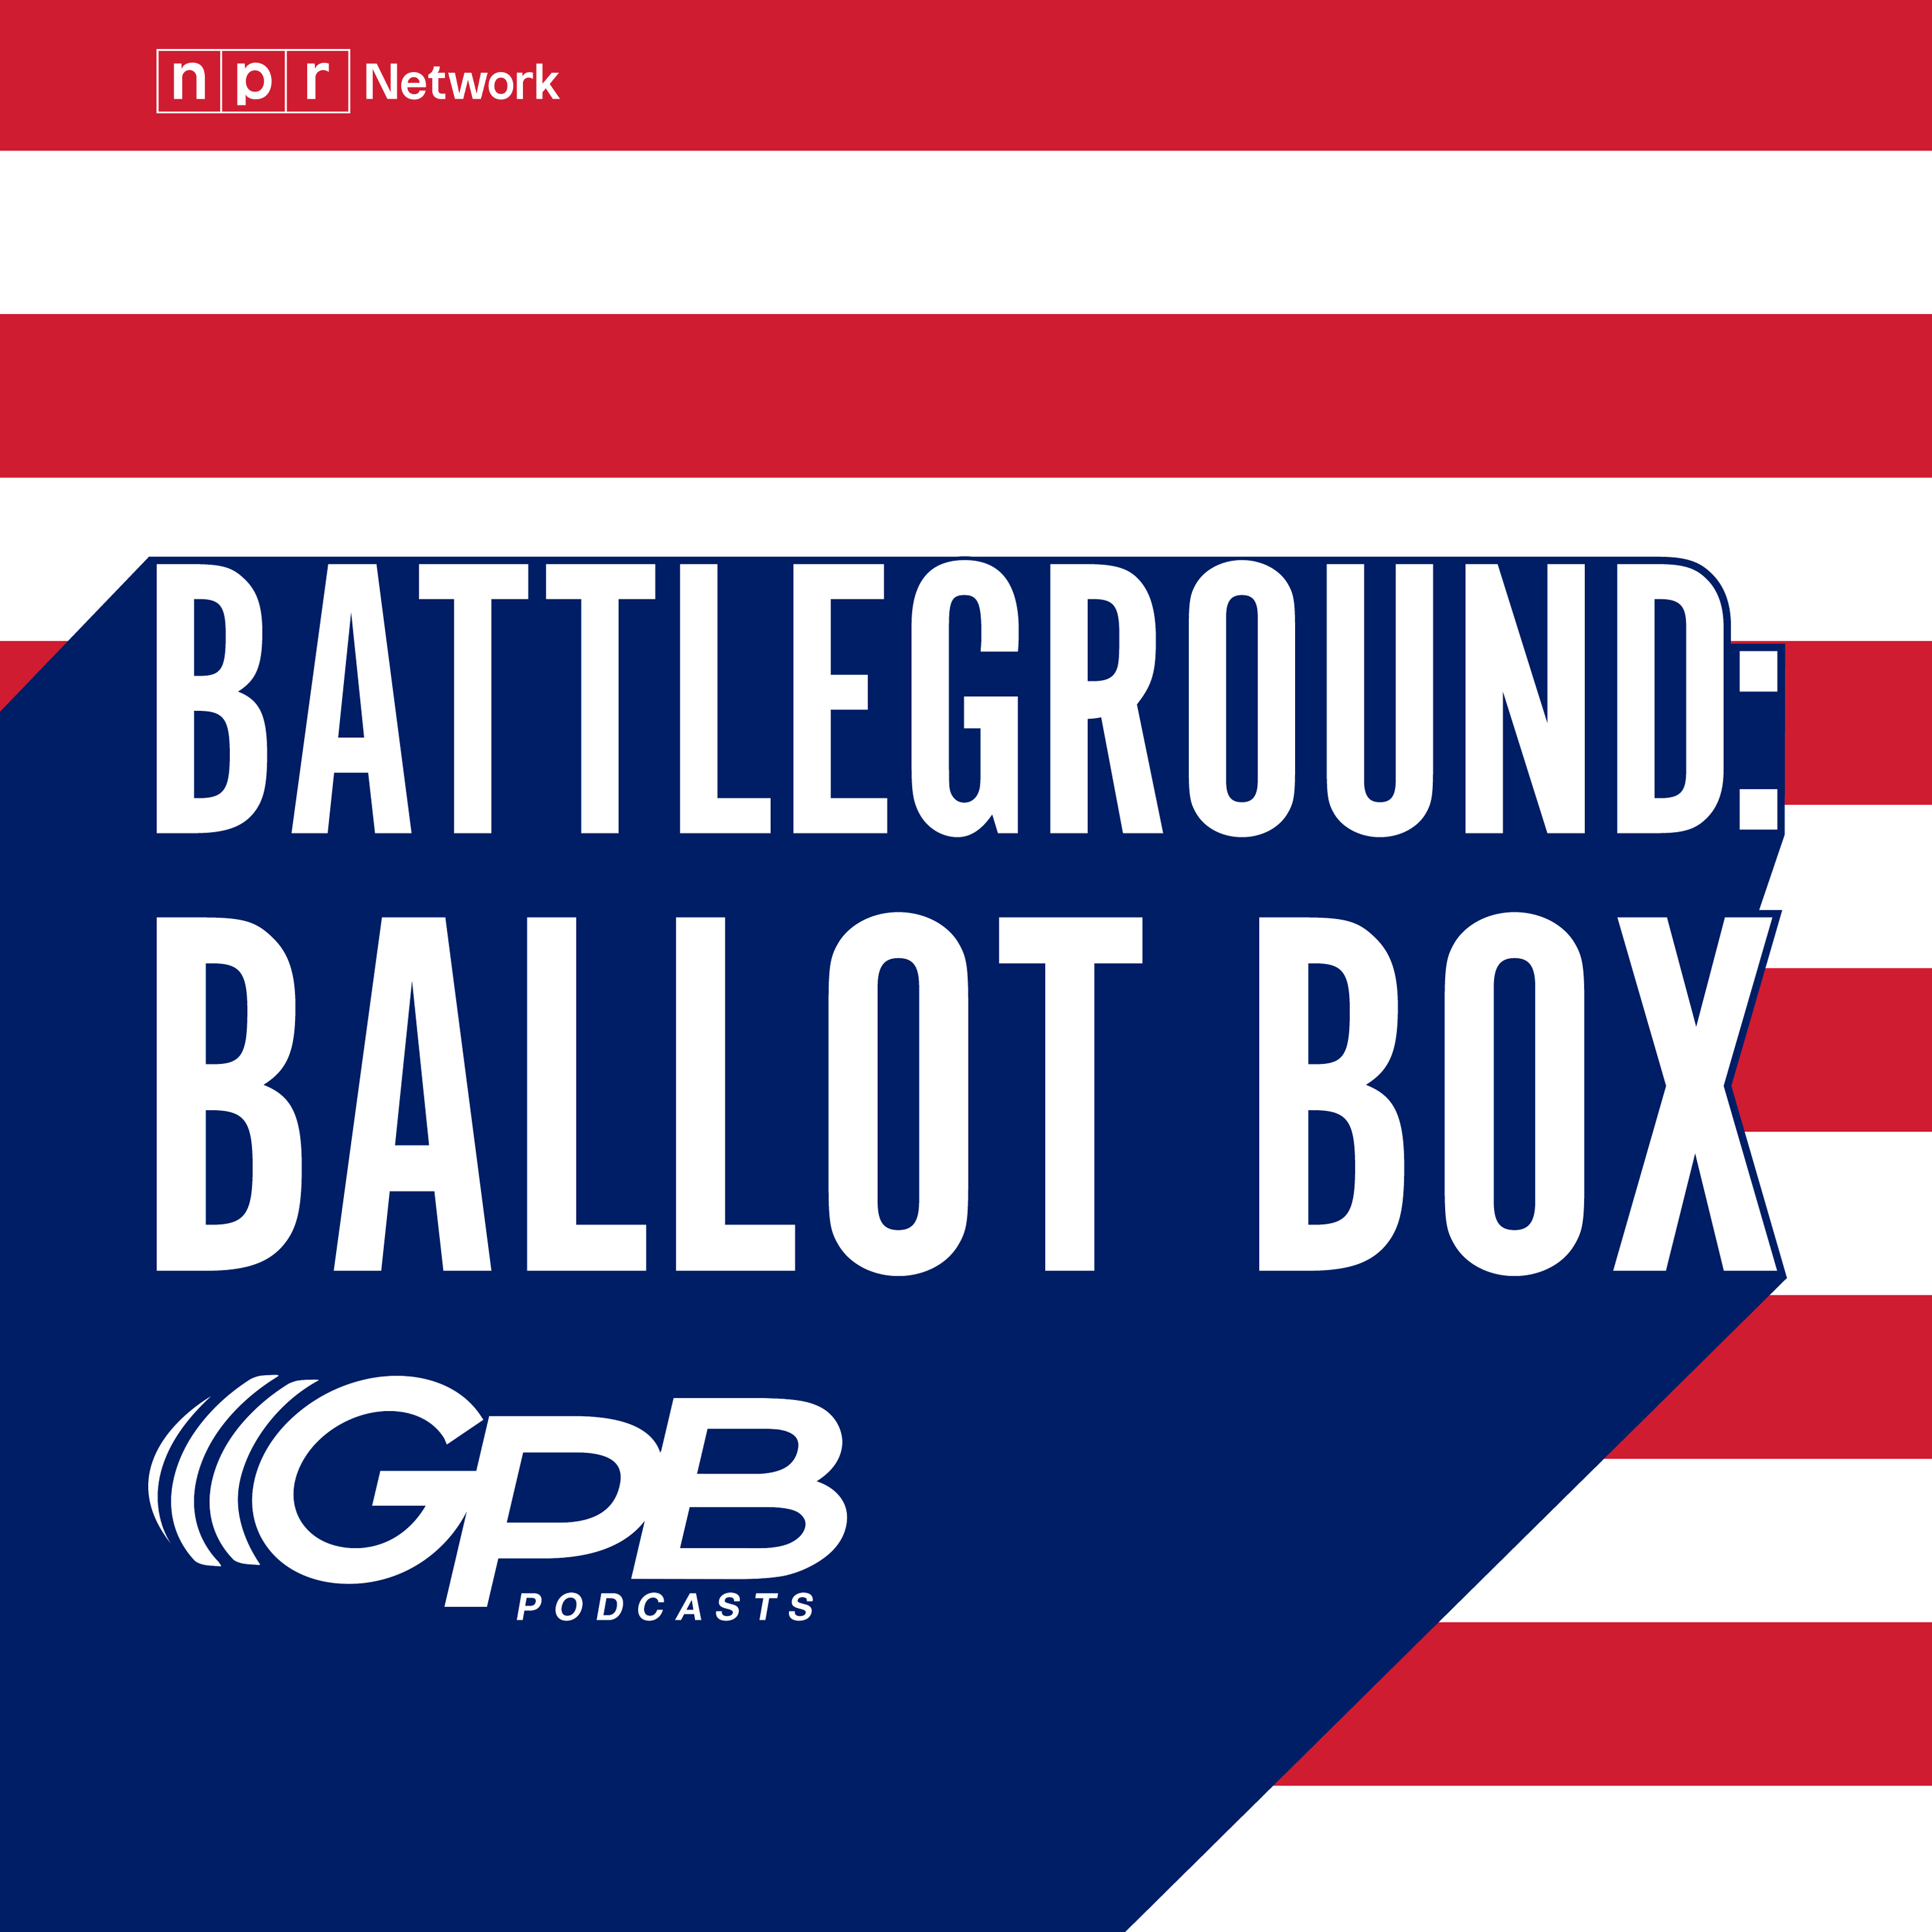 Battleground: Ballot Box podcast show image